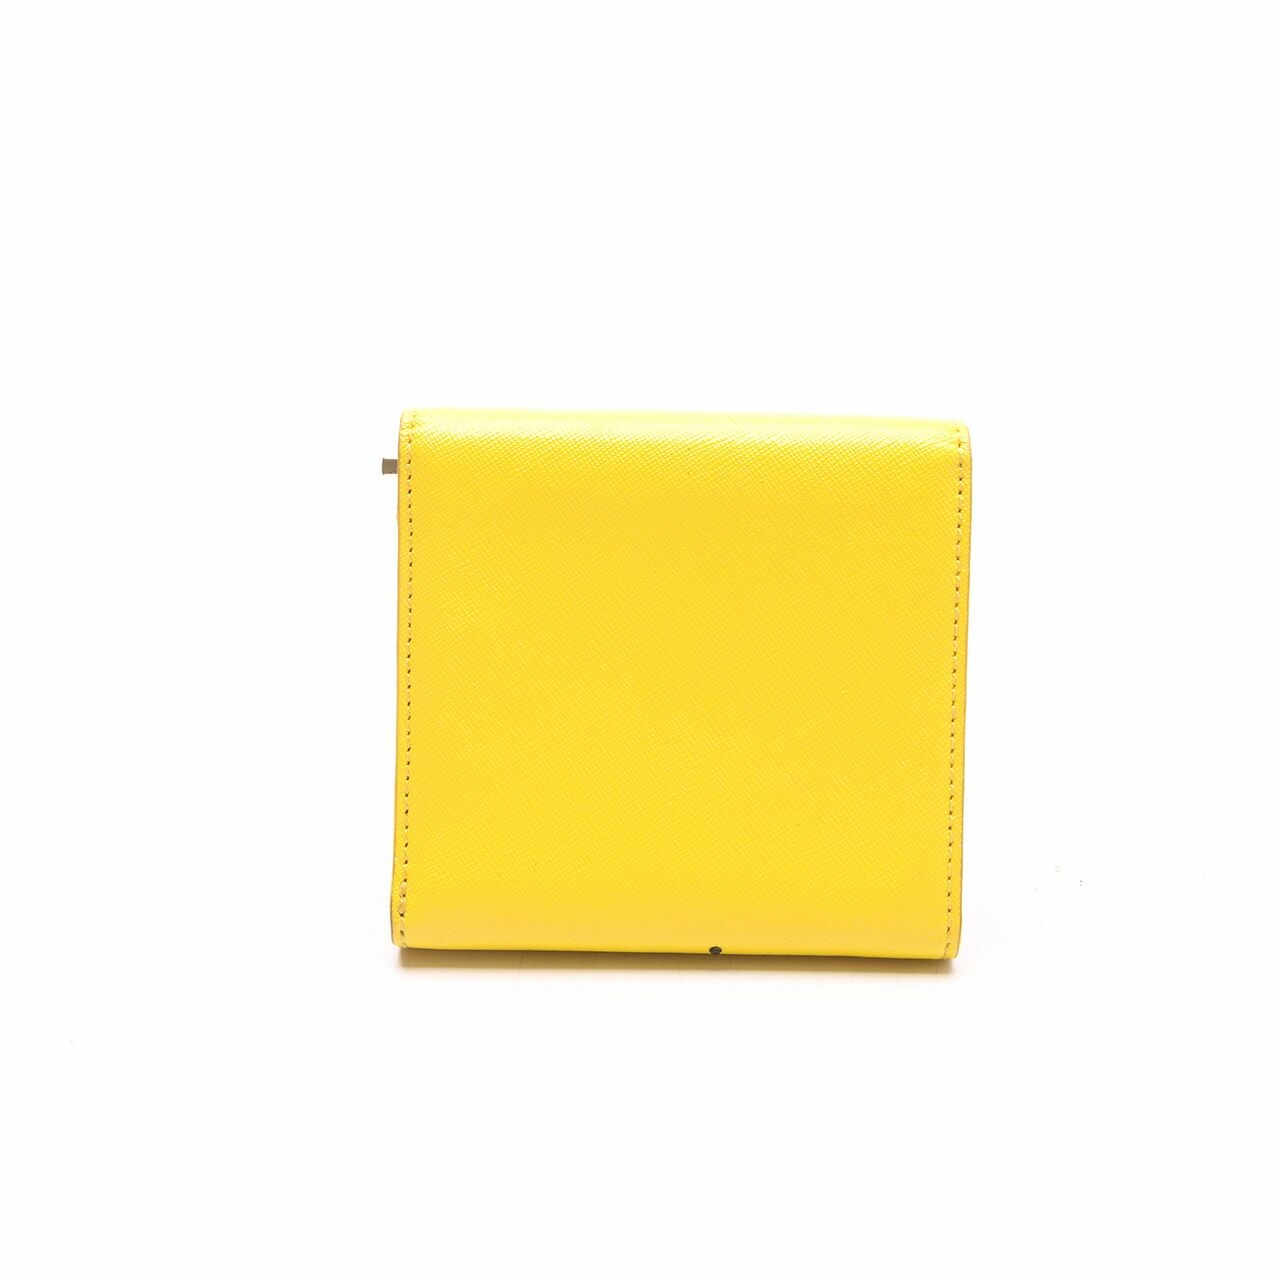 Tory Burch Yellow Flap Wallet 